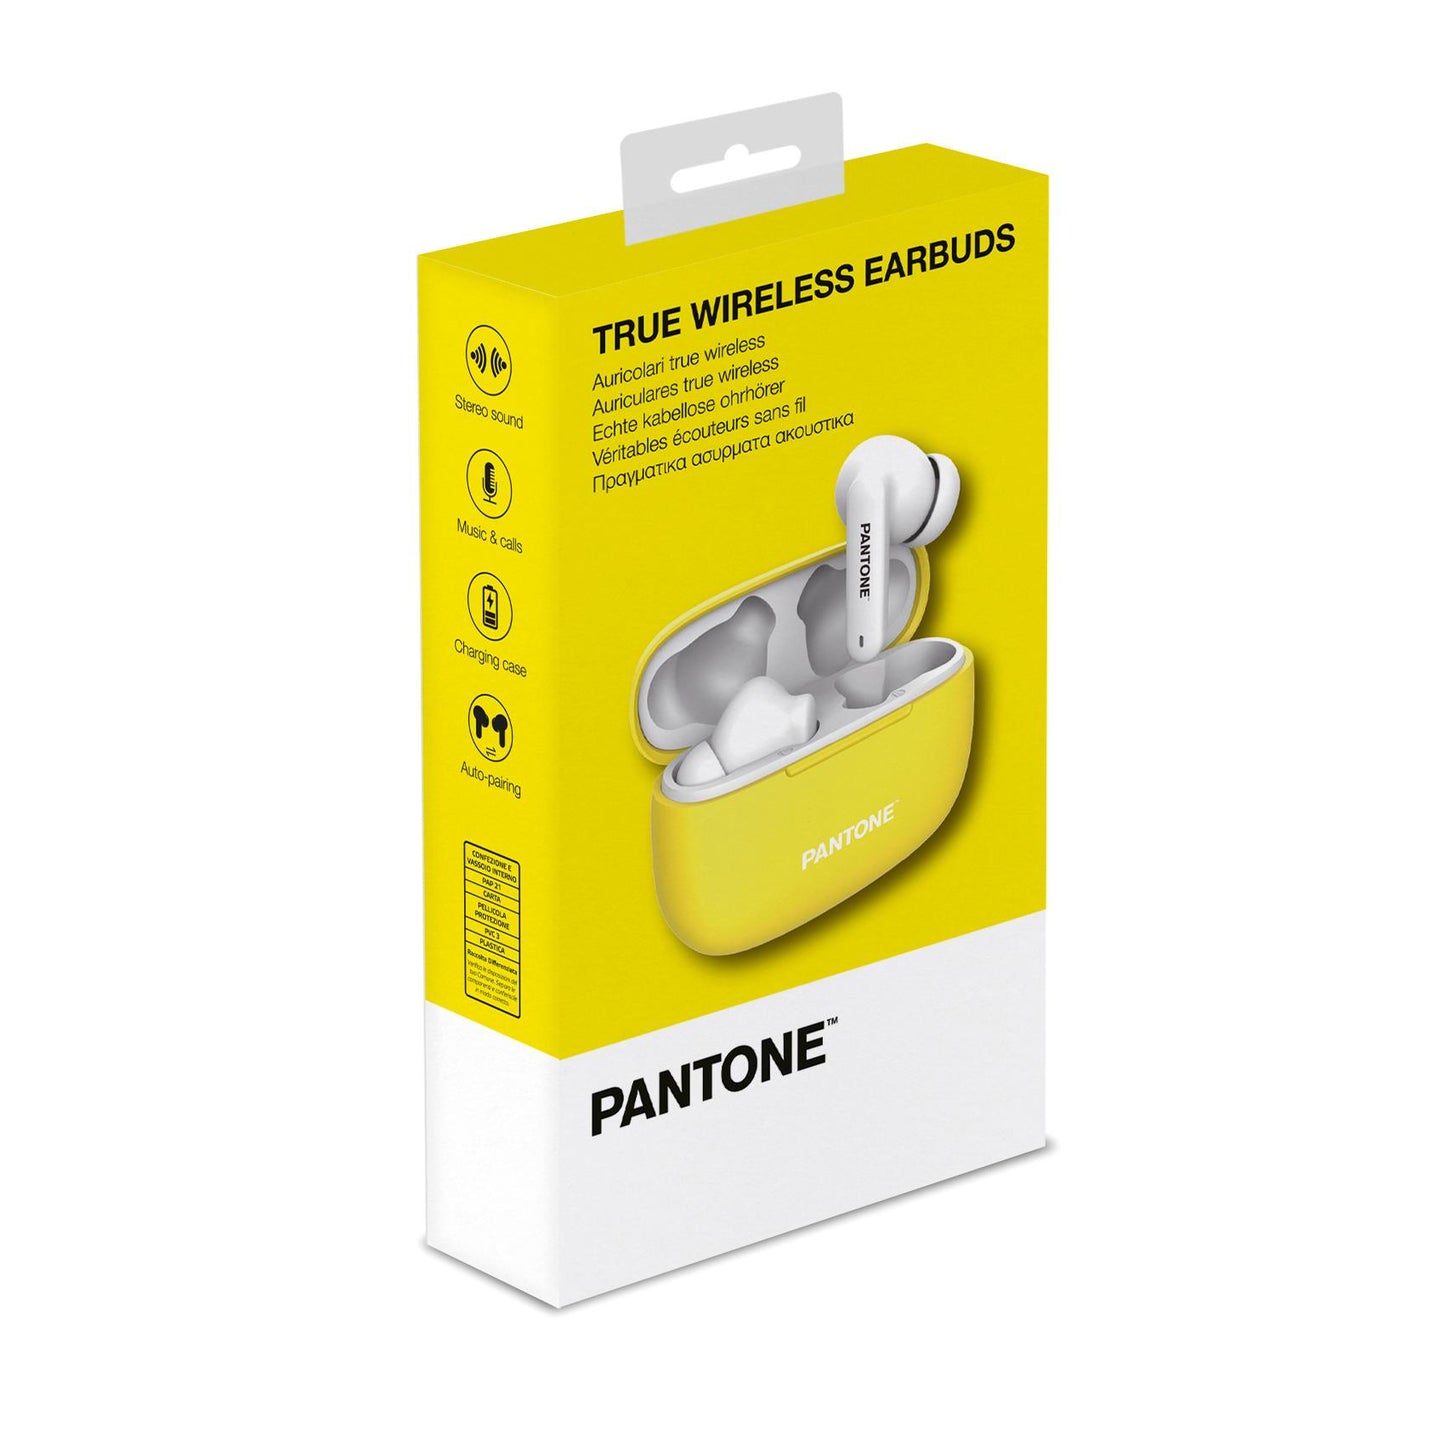 Auricolari True Wireless Earphones PANTONE Yellow